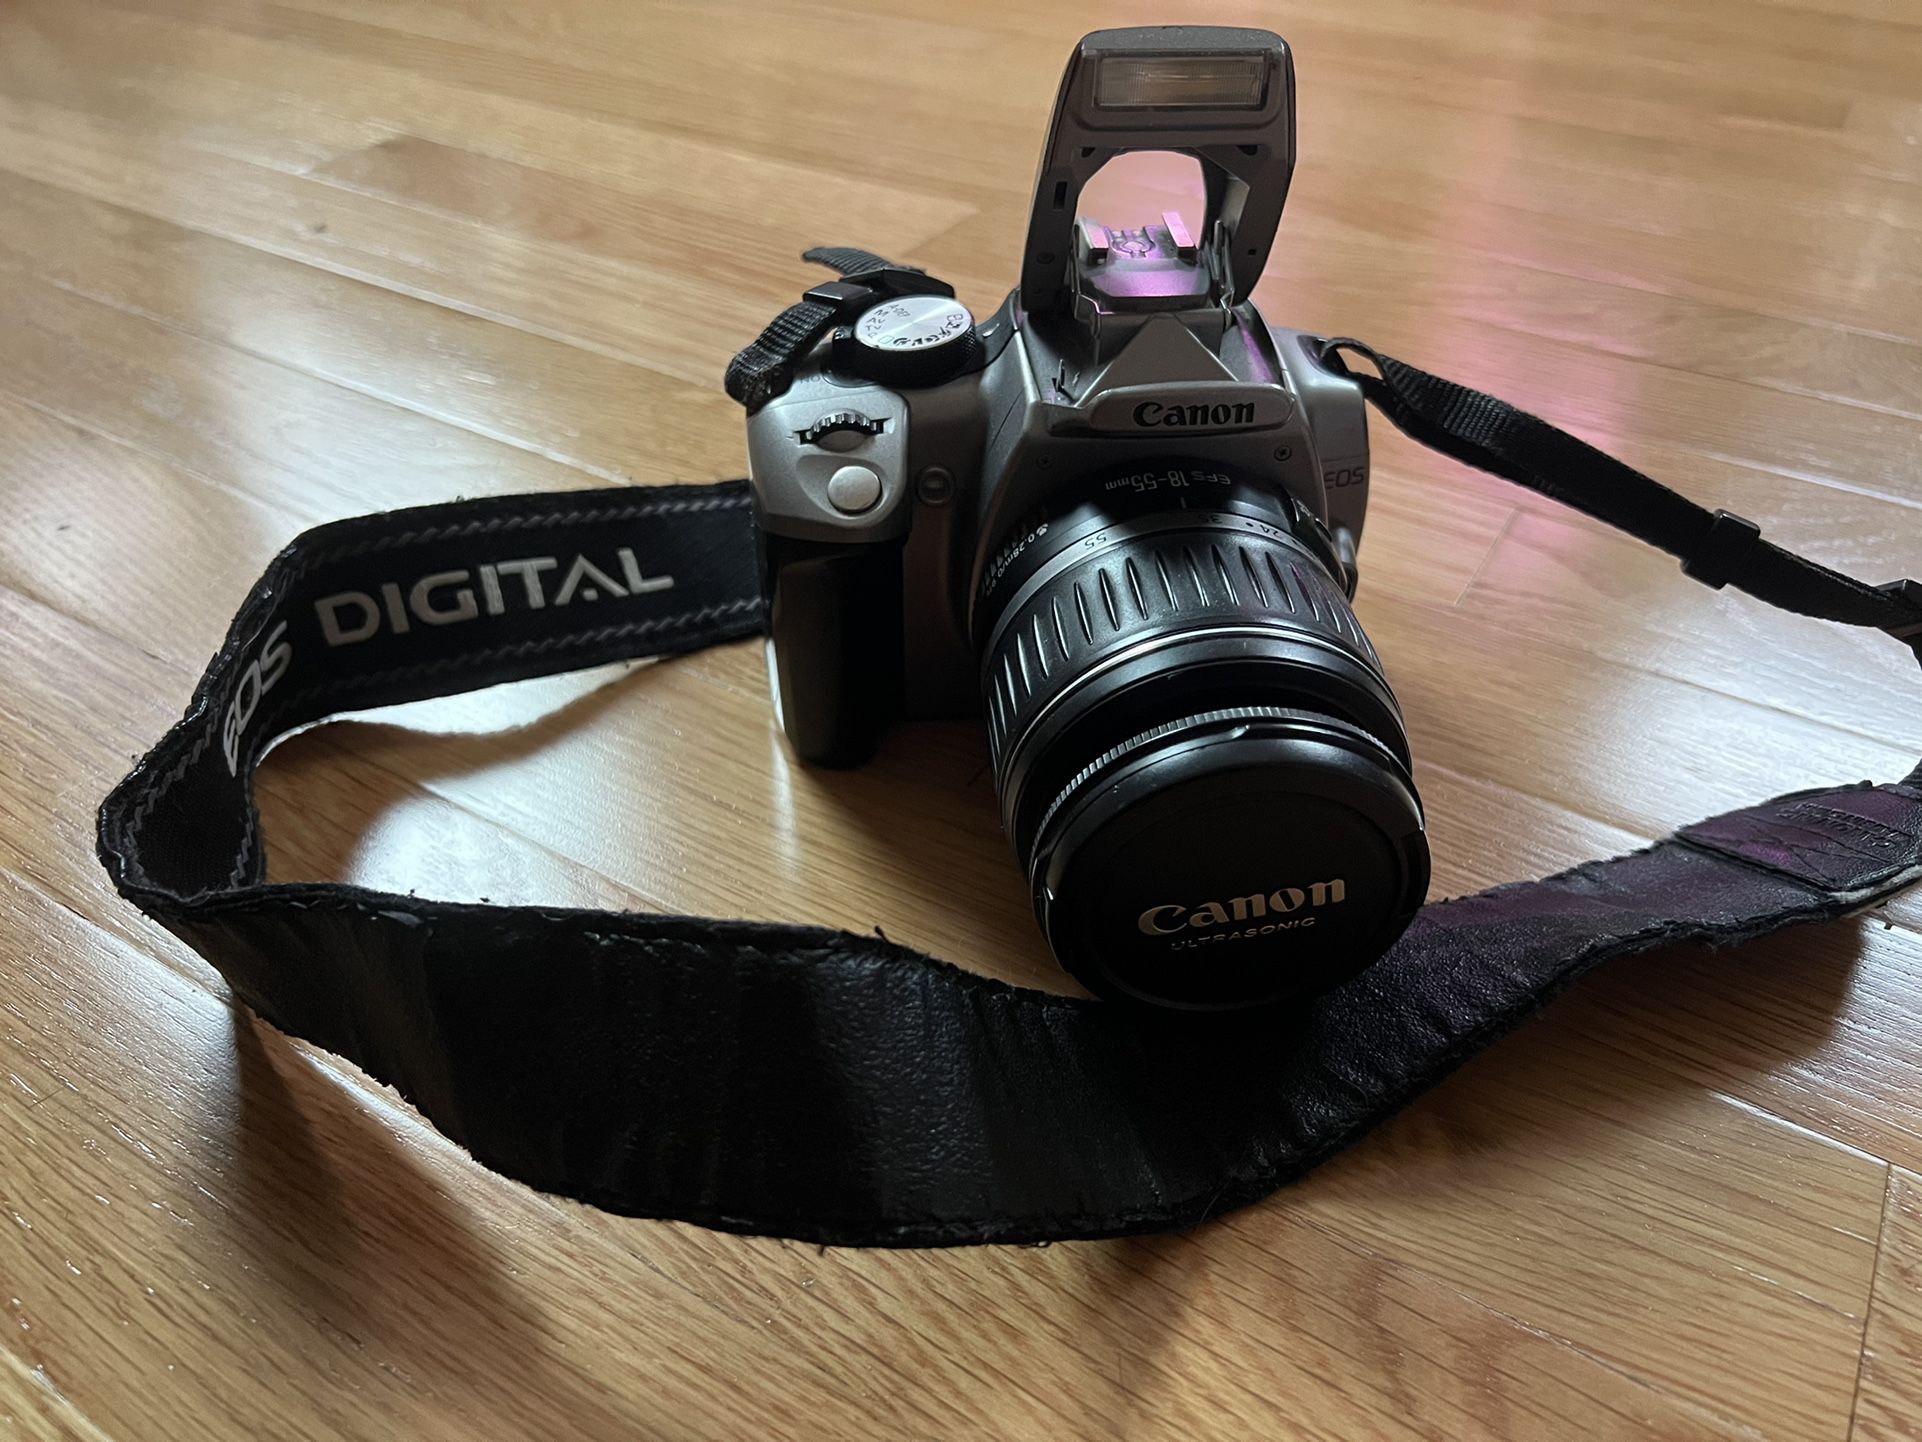 Camera Canon Digital Rebel XT DSLR with EF-S 18-55mm f/3.5-5.6 Lens Silver